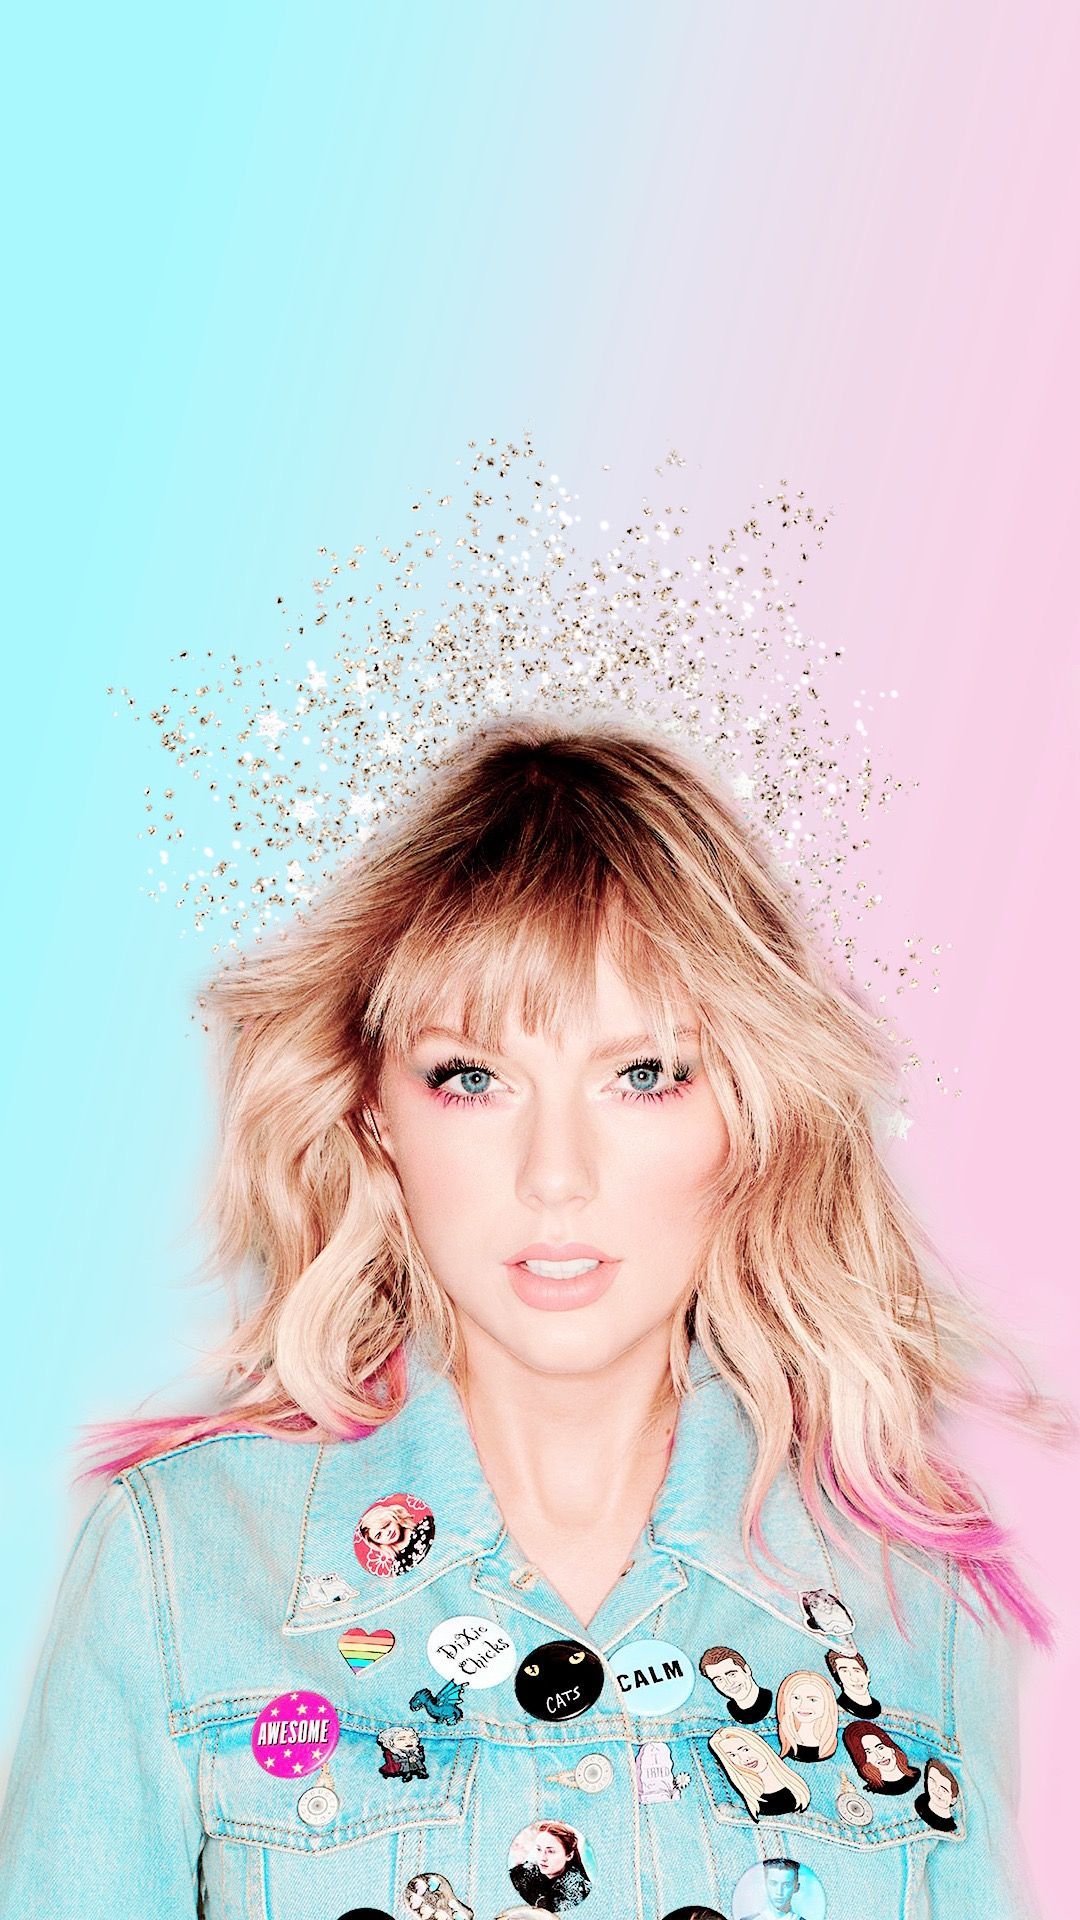 Taylor Swift TS7 2019. Taylor swift wallpaper, Taylor swift picture, Taylor swift